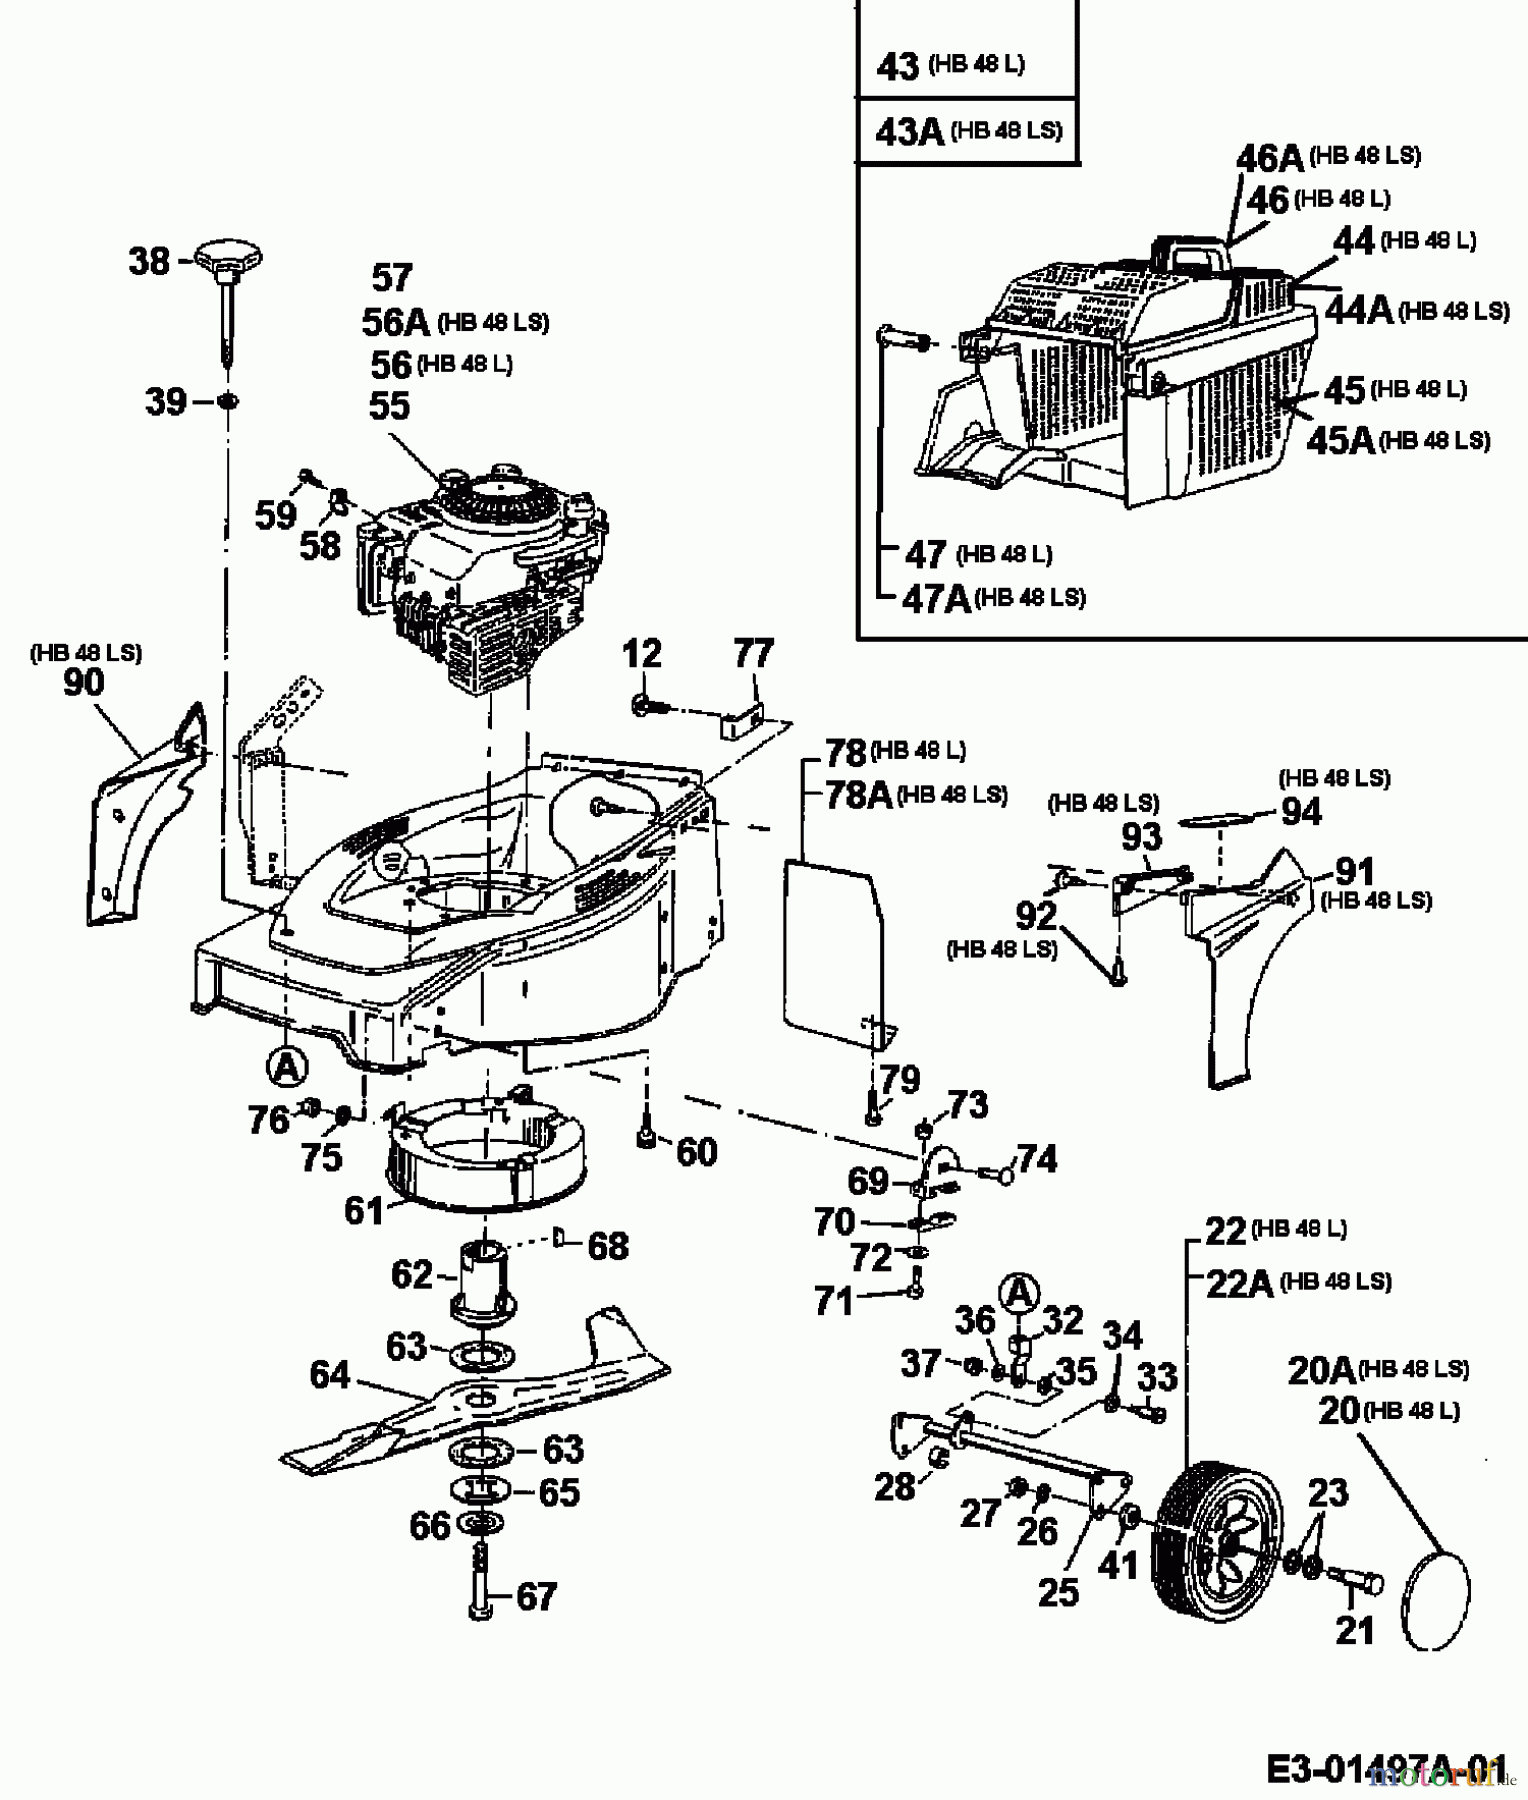  Gutbrod Petrol mower HB 48 LS 11C-T58V690  (2000) Basic machine